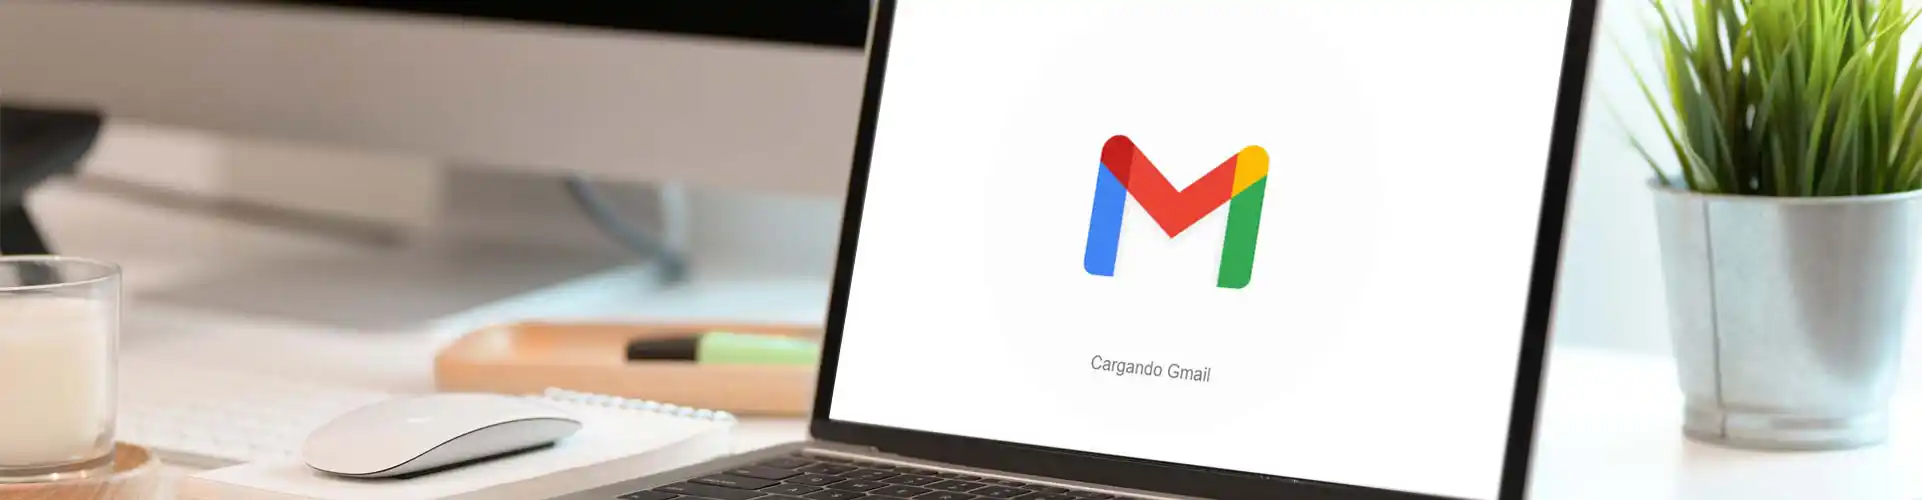 gmail gratis corporativo